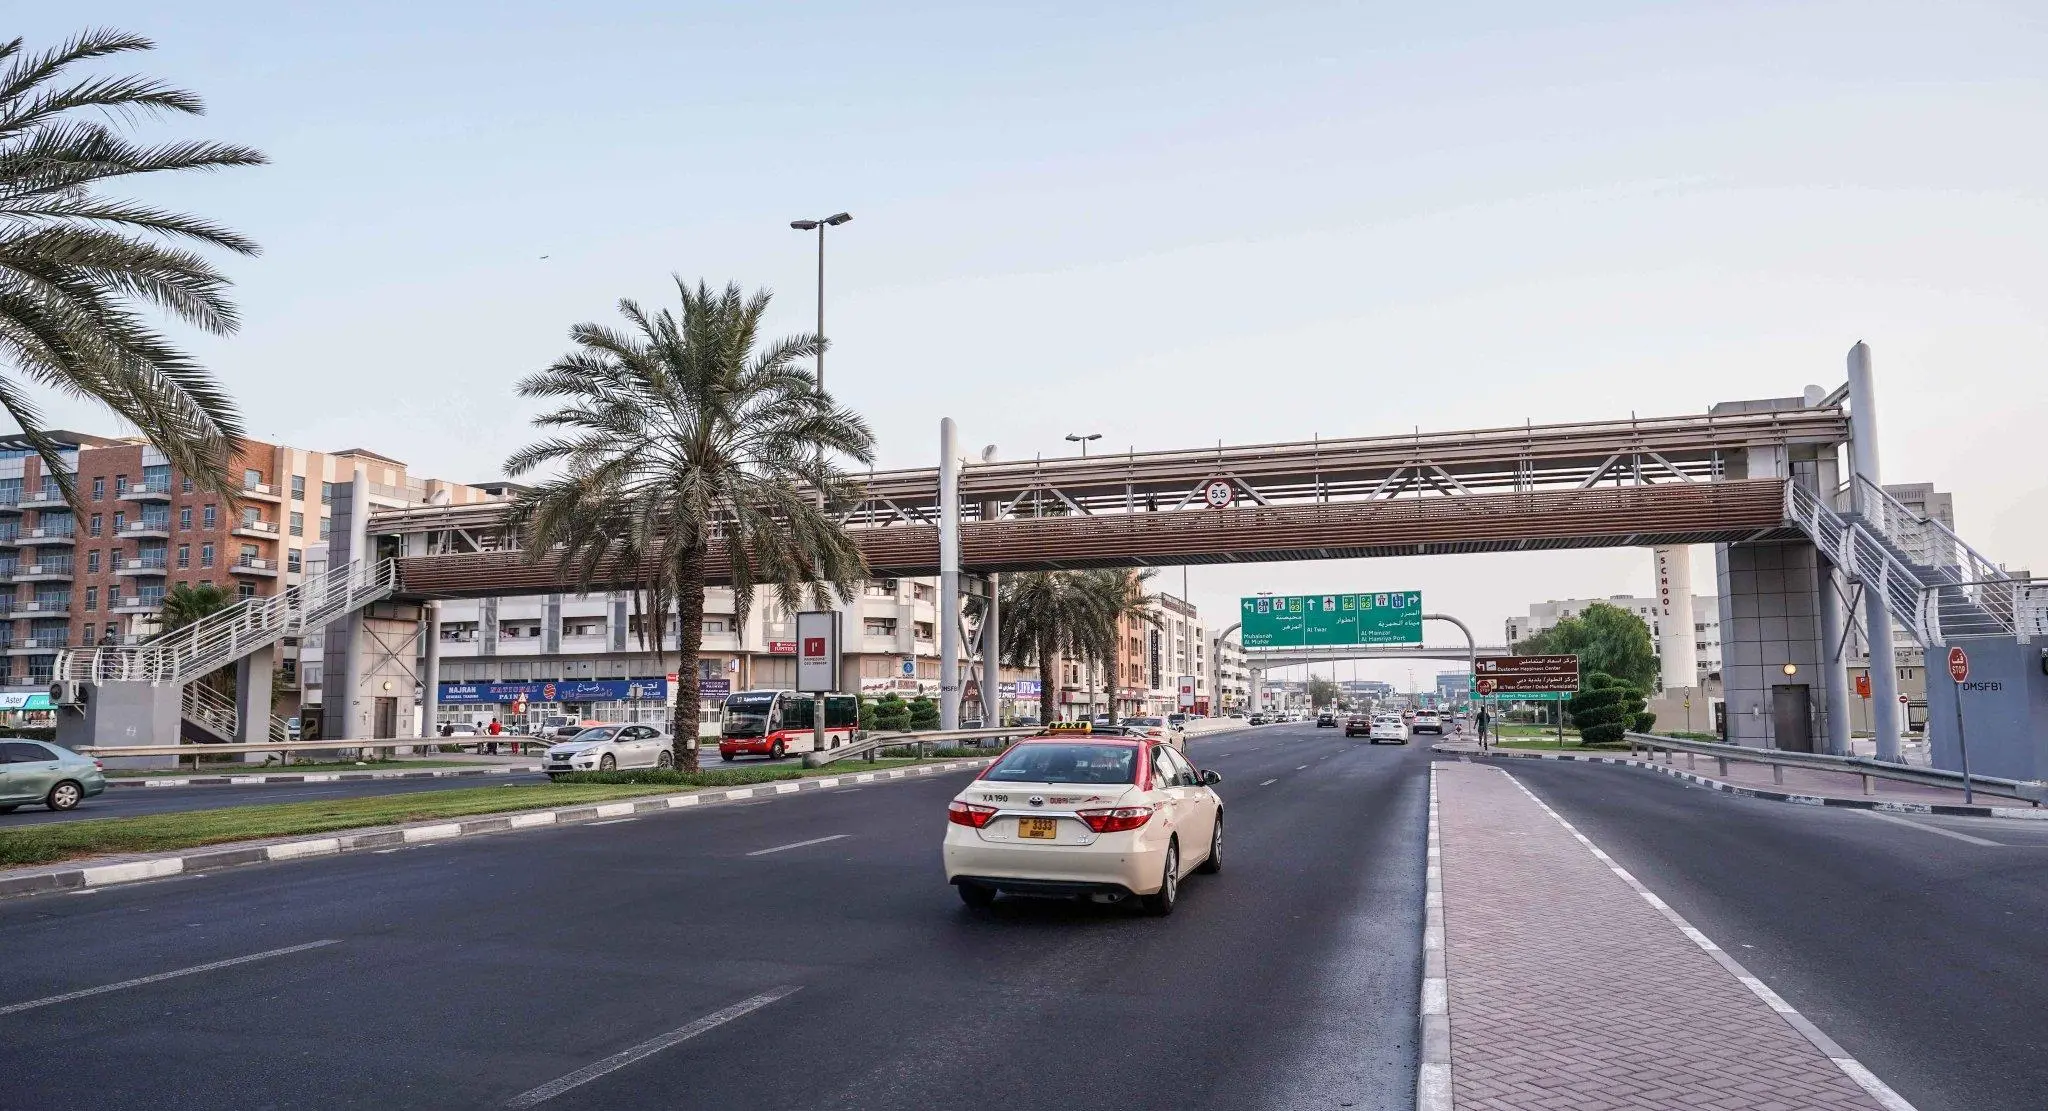 Dubai, UAE, 22.02.2021. Marina Pedestrian Bridge footbridge at the